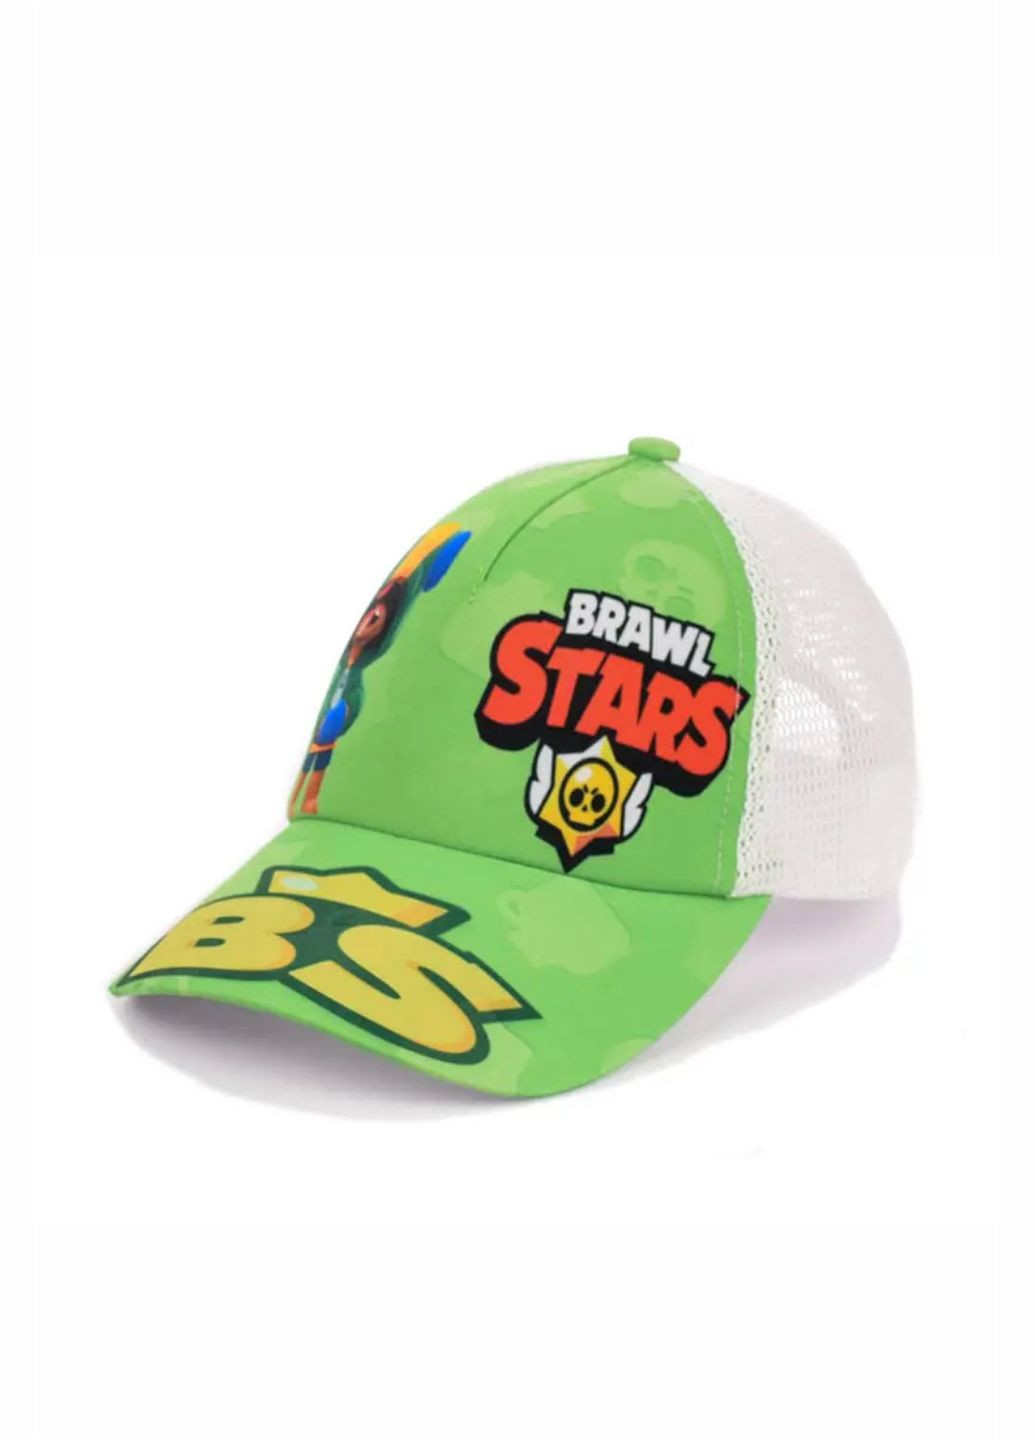 Кепка дитяча із сіткою Барвл Старс / Brawl Stars No Brand дитяча кепка (279381191)